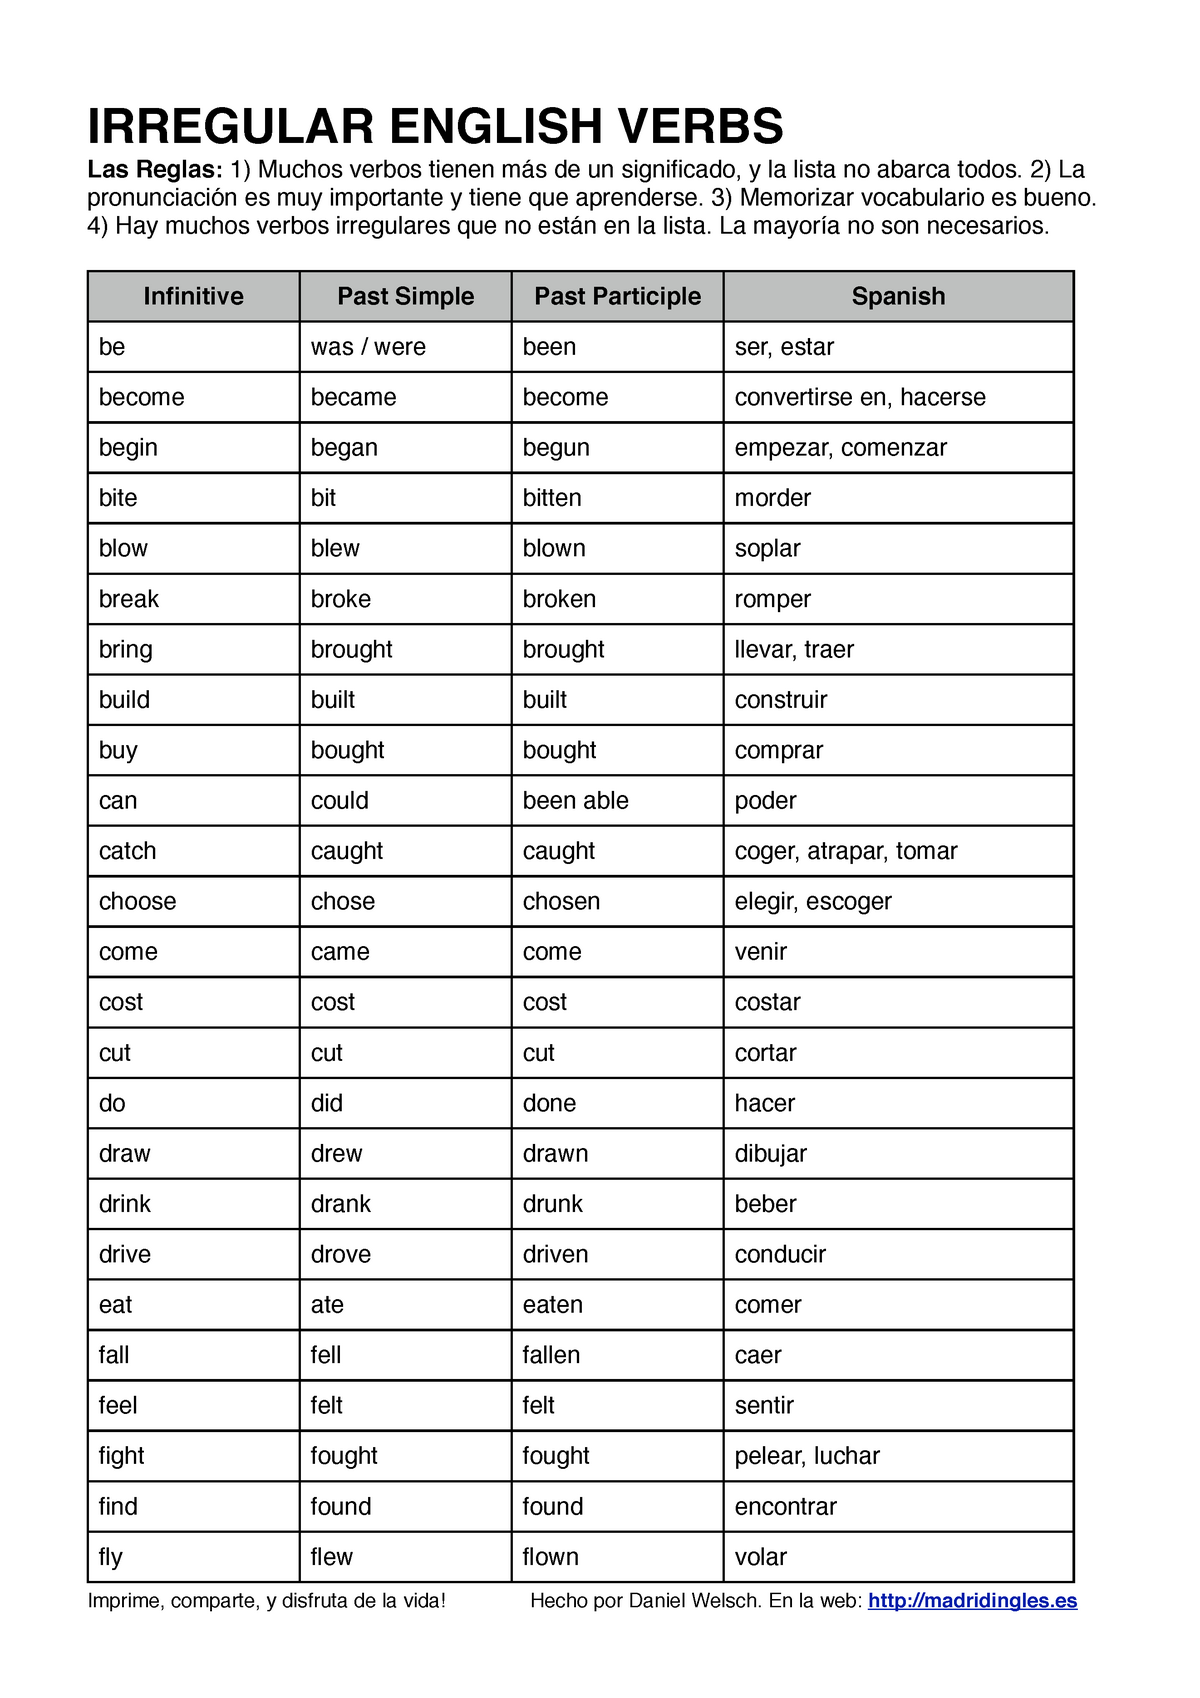 Lista de verbos irregulares en inglecc 81s - IRREGULAR ENGLISH VERBS Las Re...